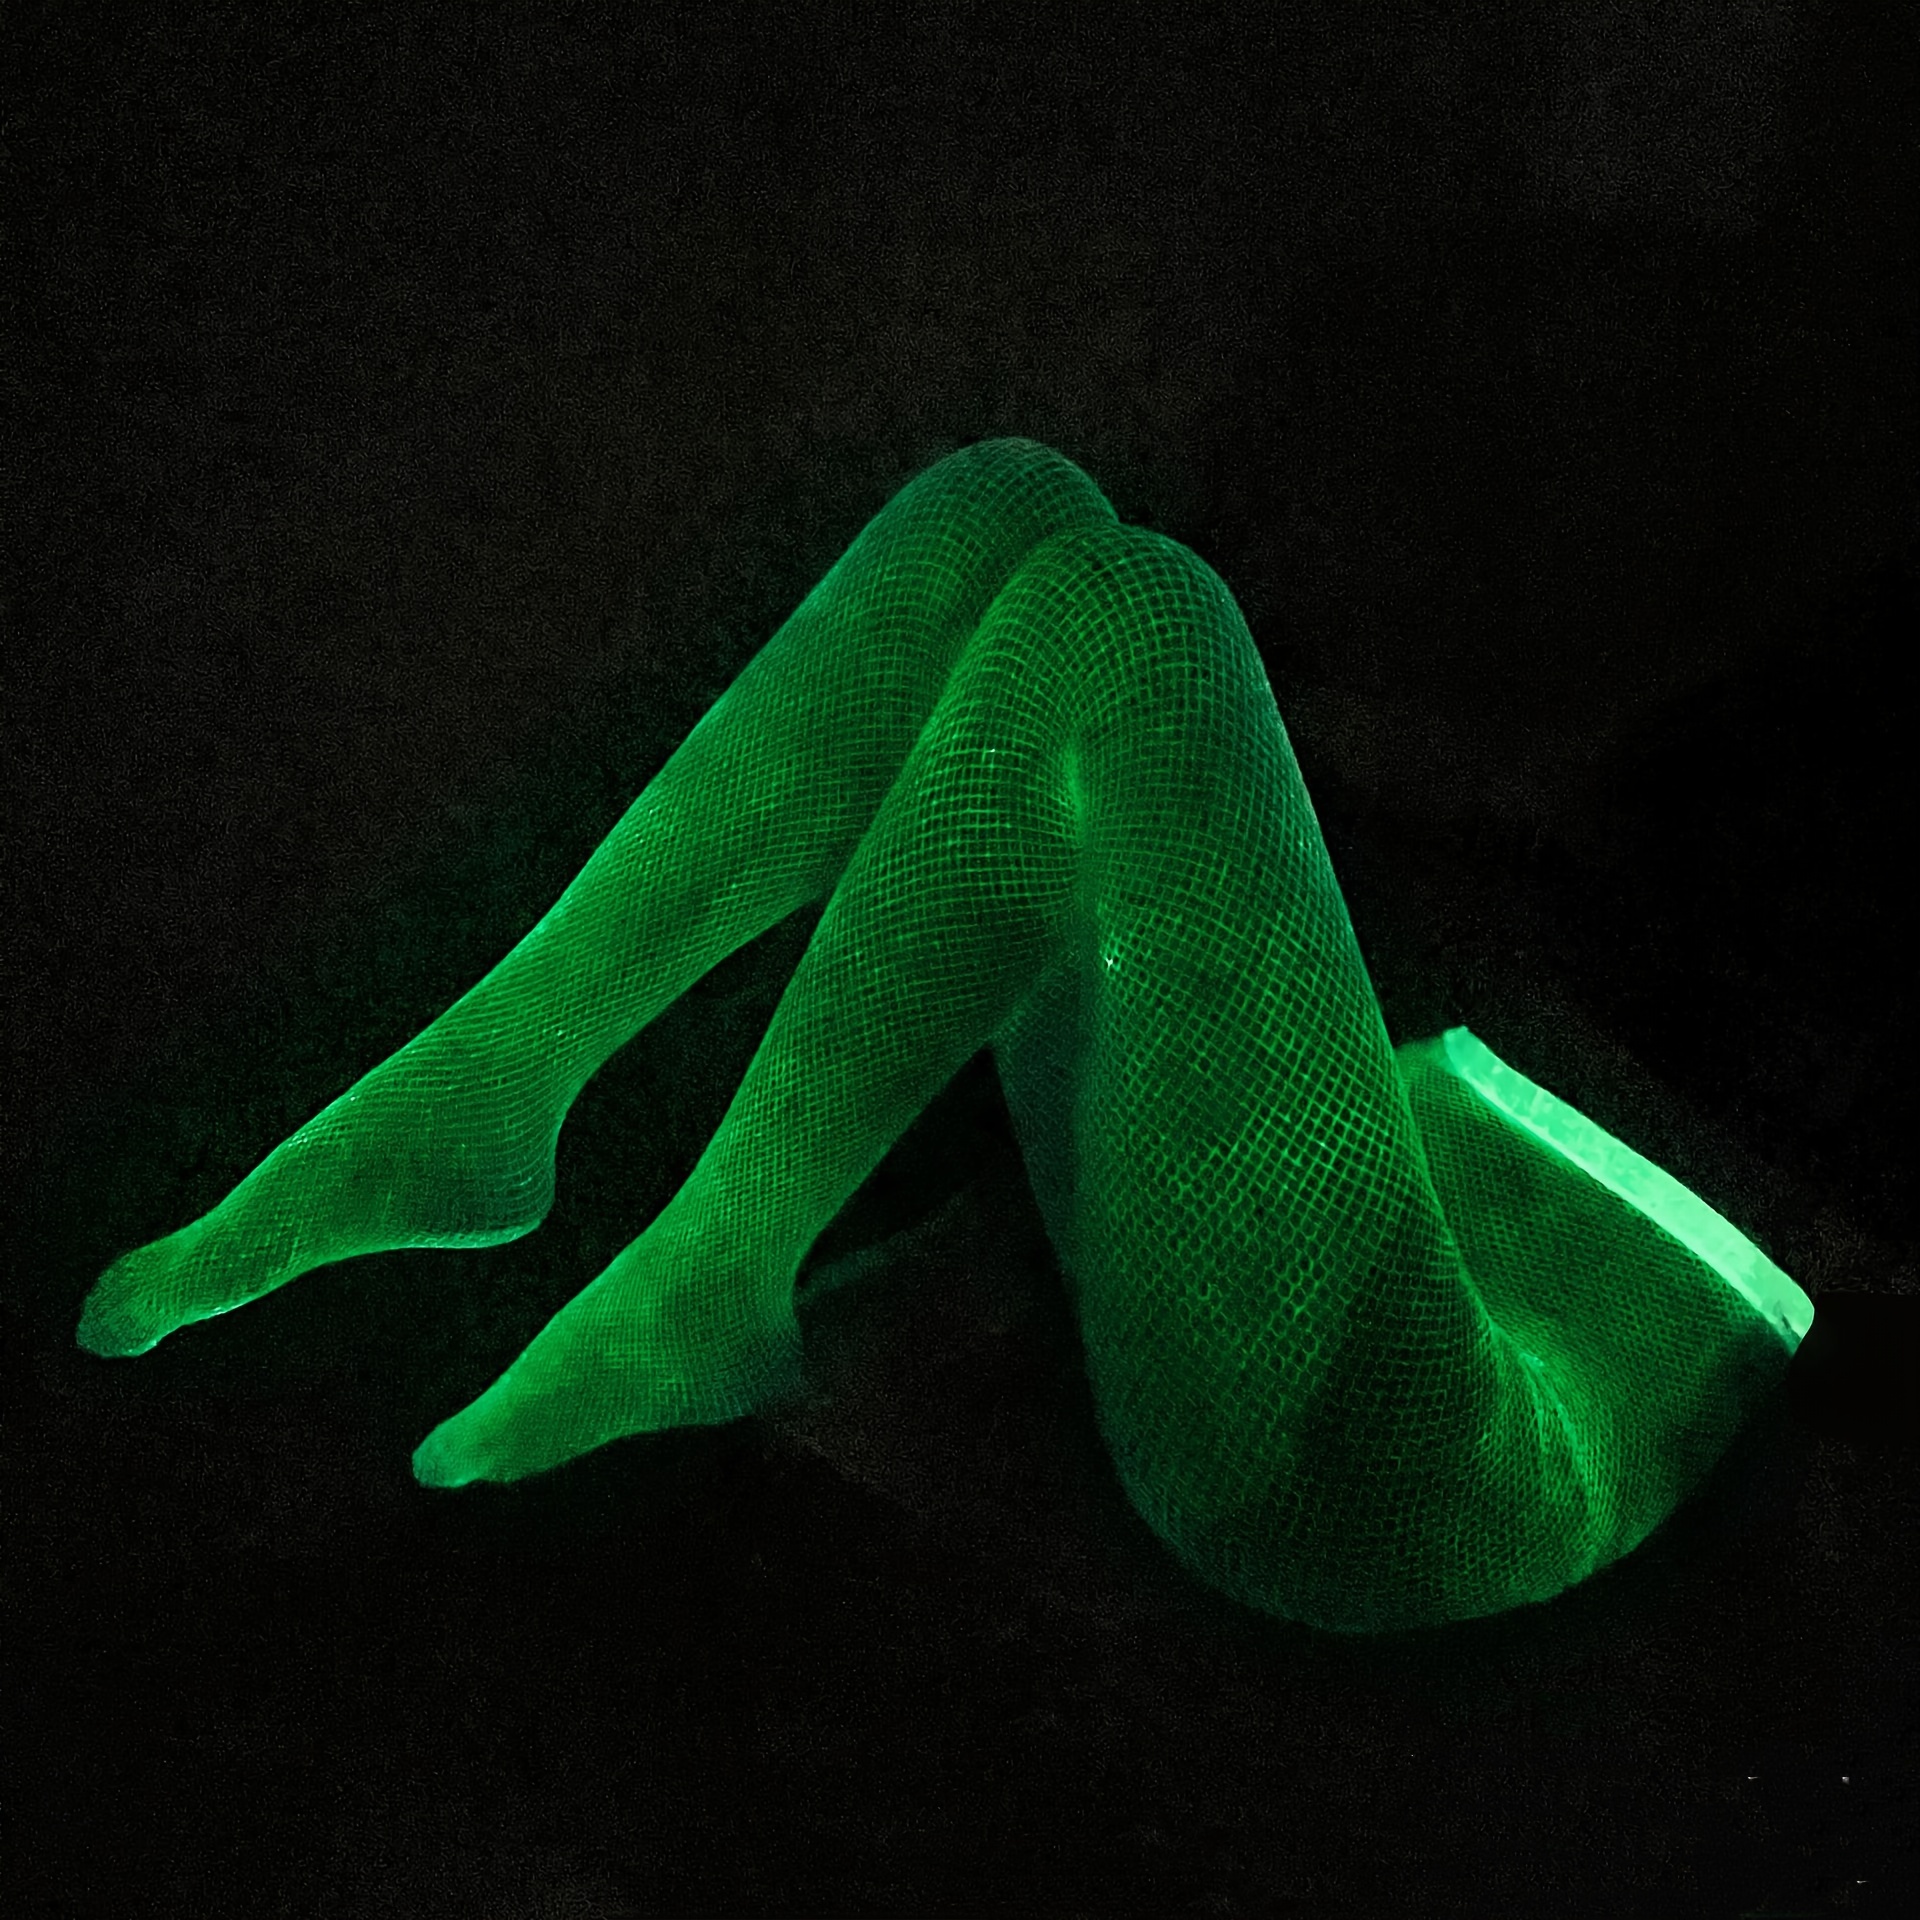 Luminous Glowing Jumpsuit Socks Stockings Fishnet Tights High